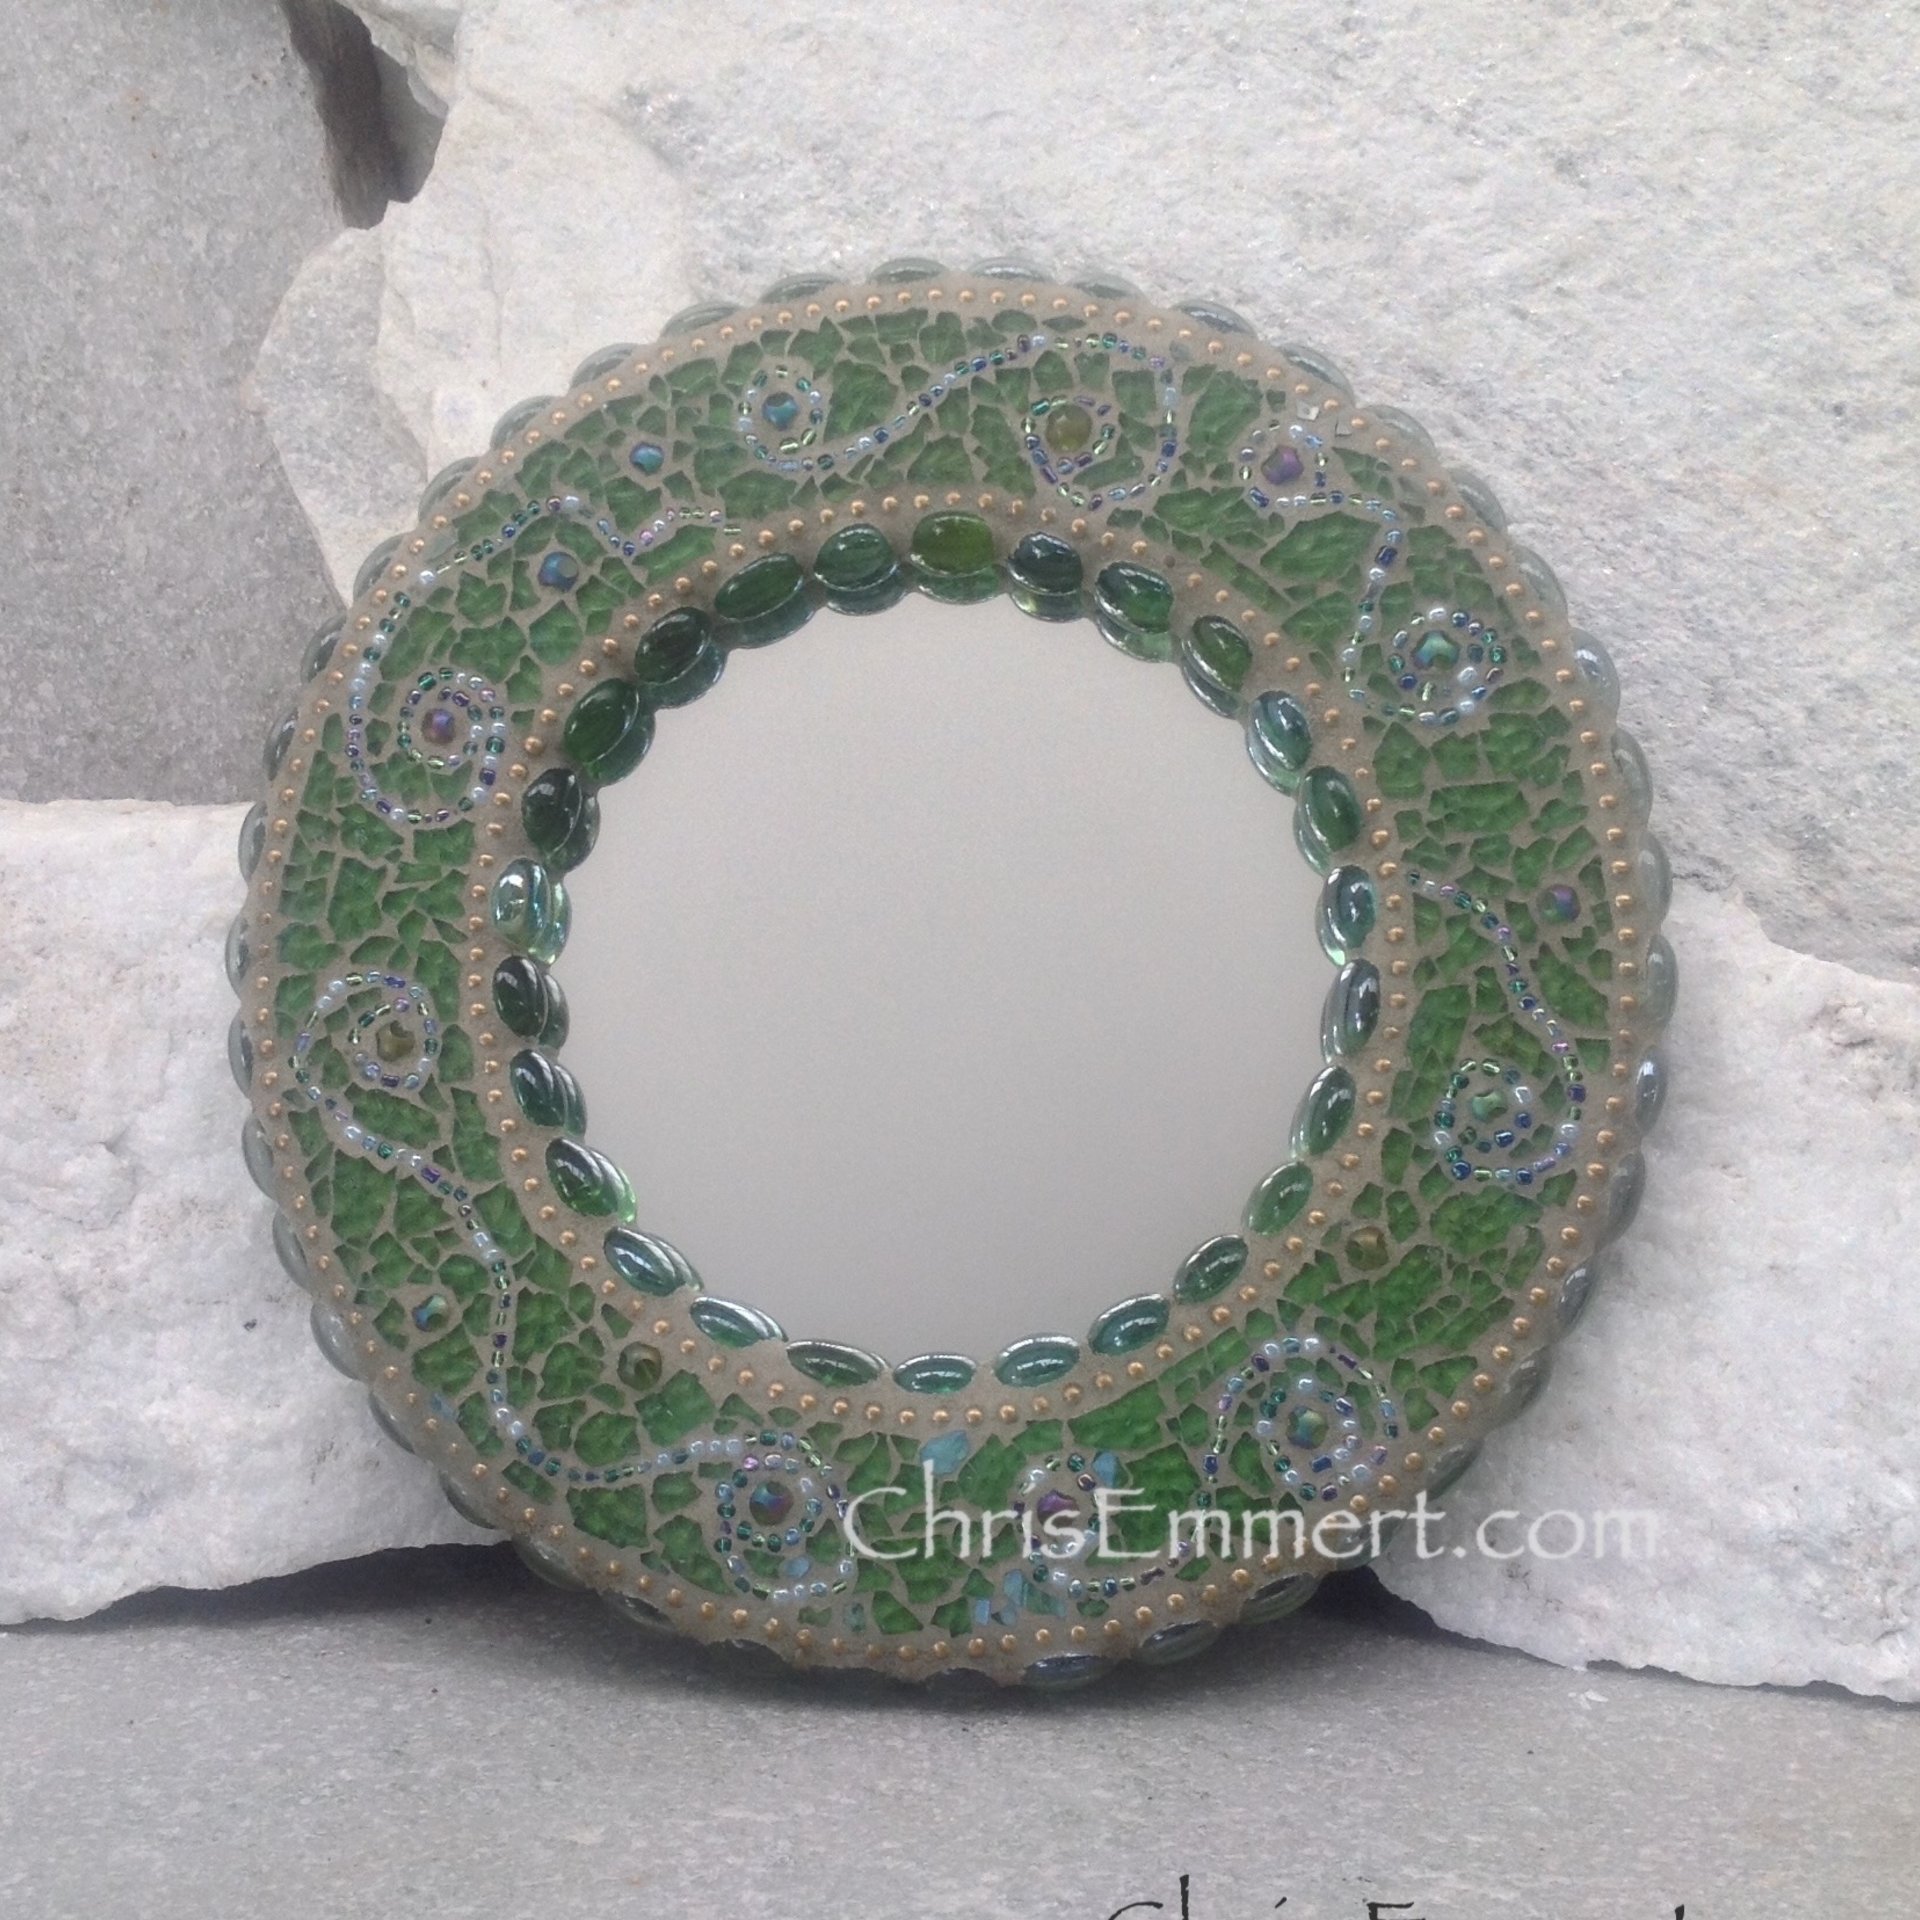 Green Mosaic Mirror, Round Mosaic Mirror, Home Decor, Greens and Gold Mirror, Teen Decor